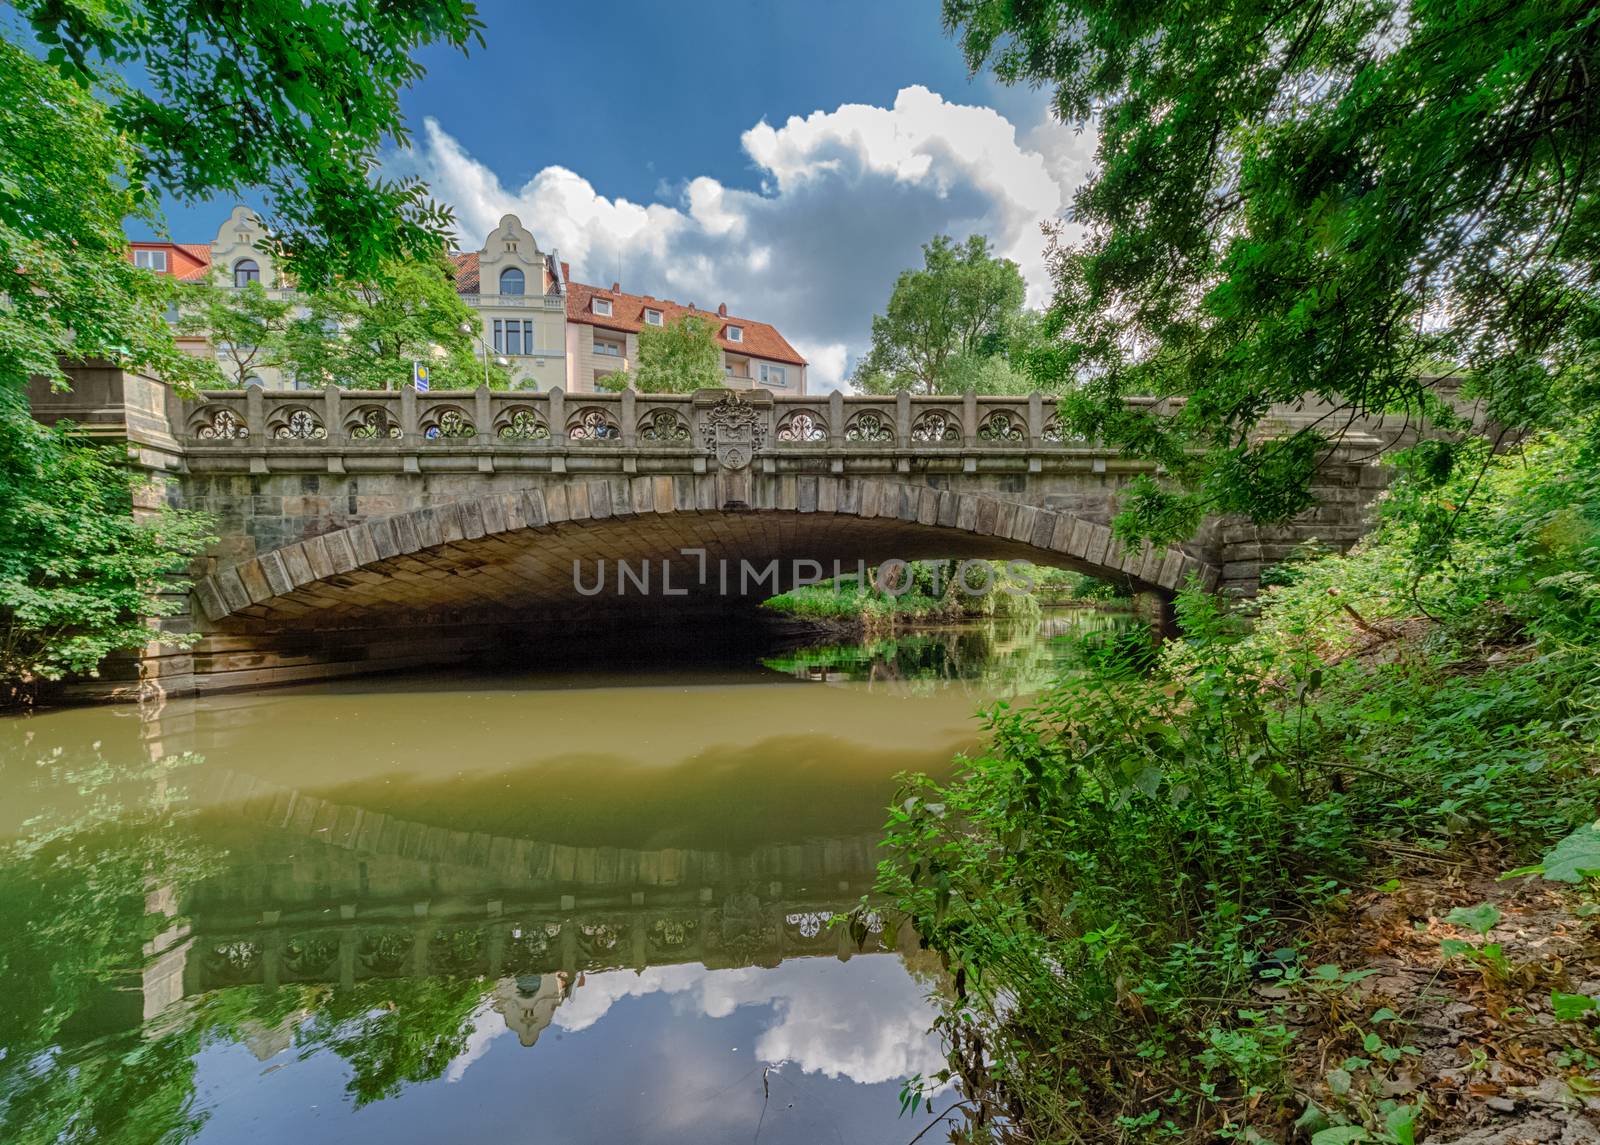 Ancient Koenigsworther bridge in Hannover, Germany.